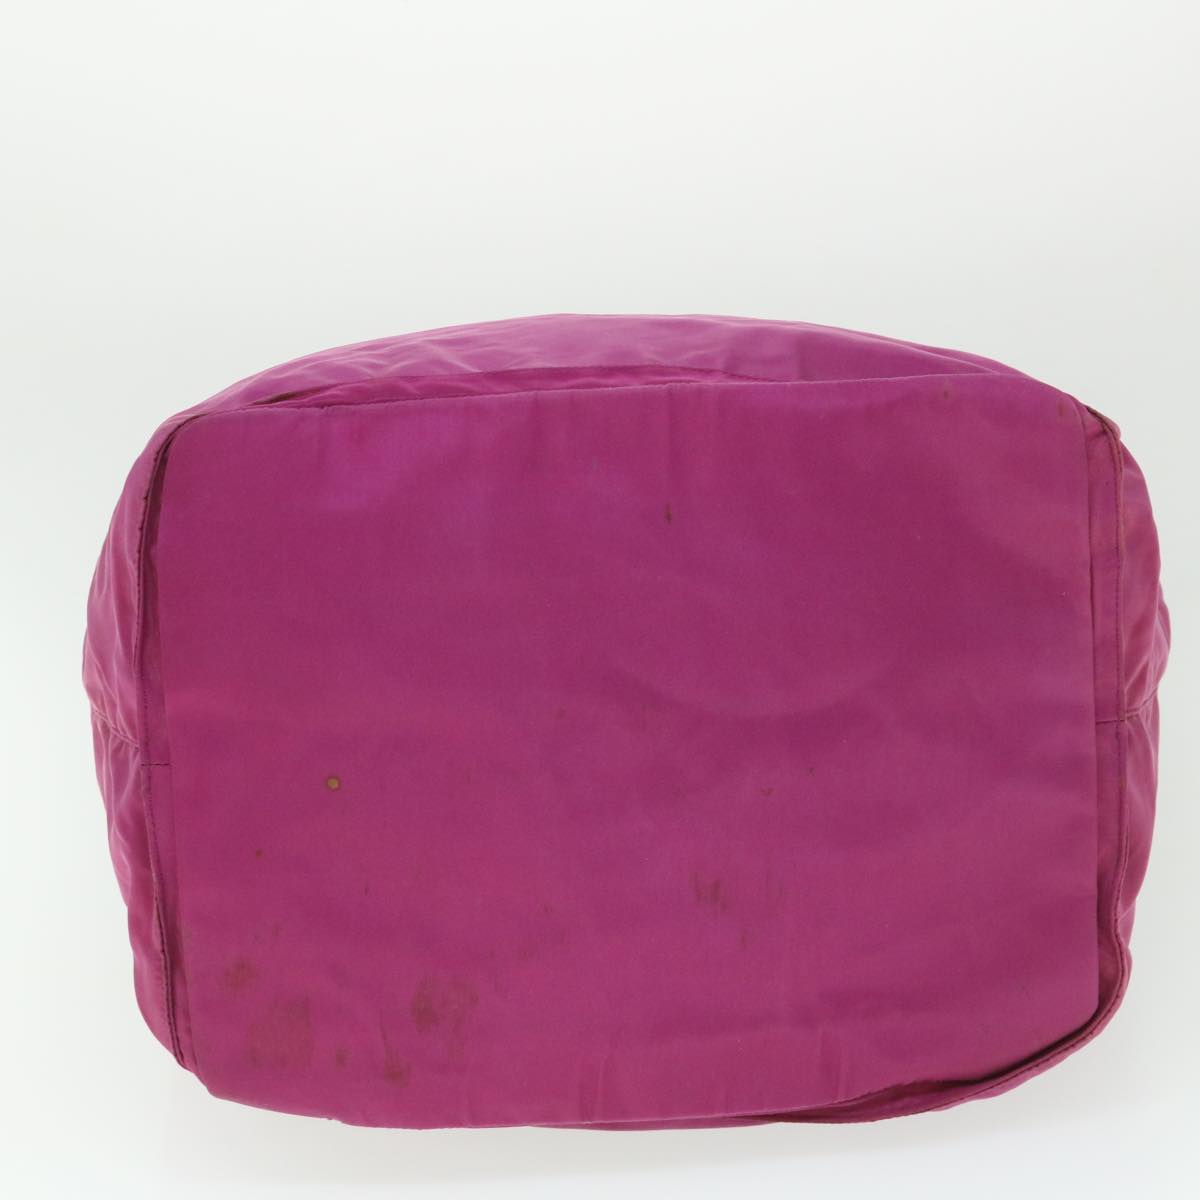 PRADA Hand Bag Nylon Pink Auth 54383